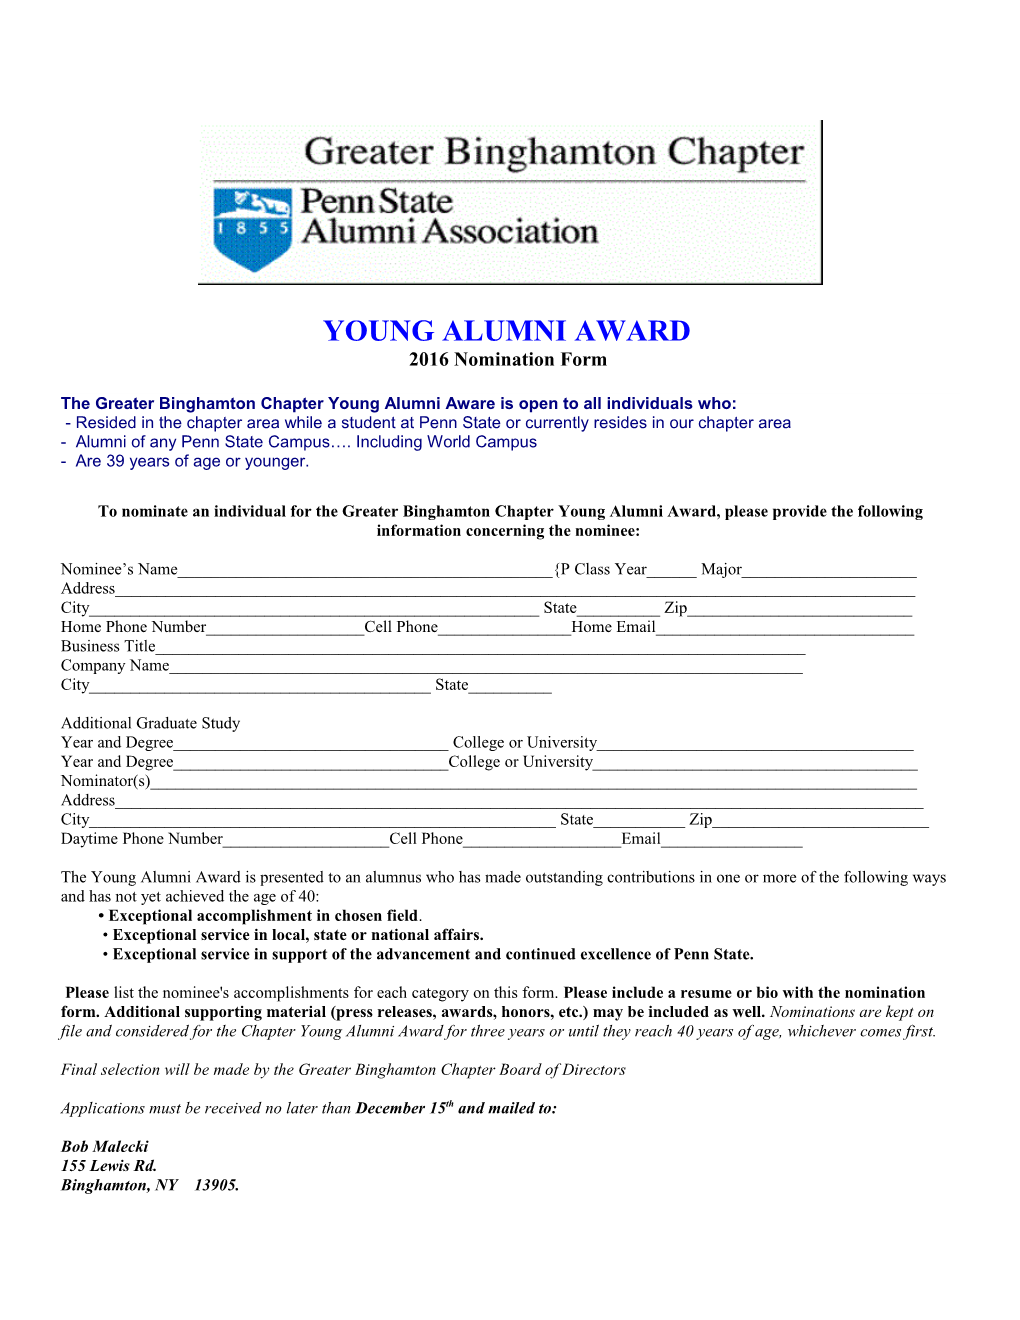 Young Alumni Award